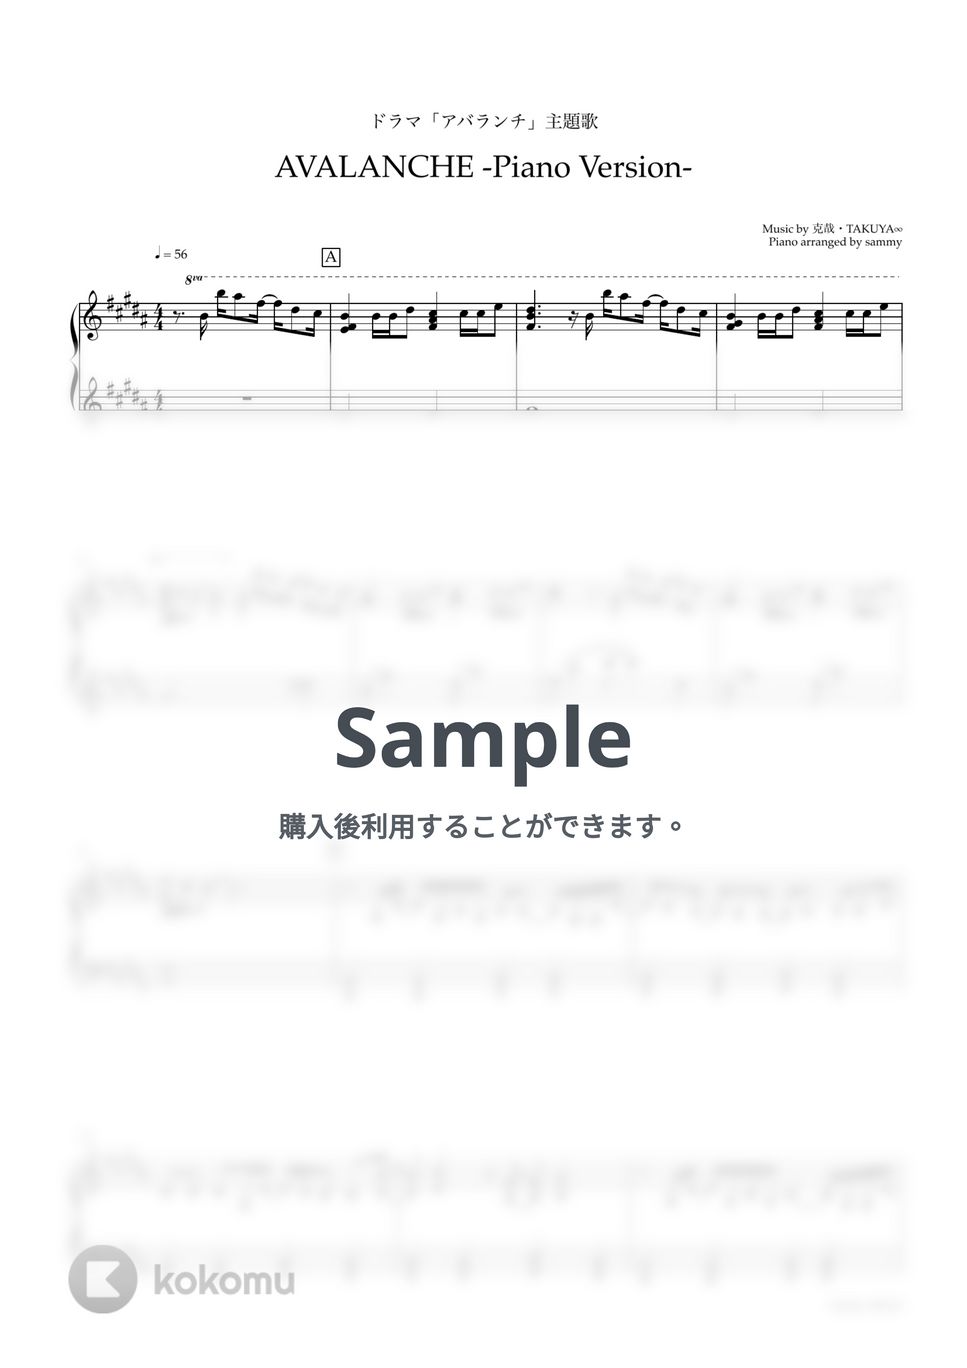 UVERworld - AVALANCHE -Piano Version- by sammy